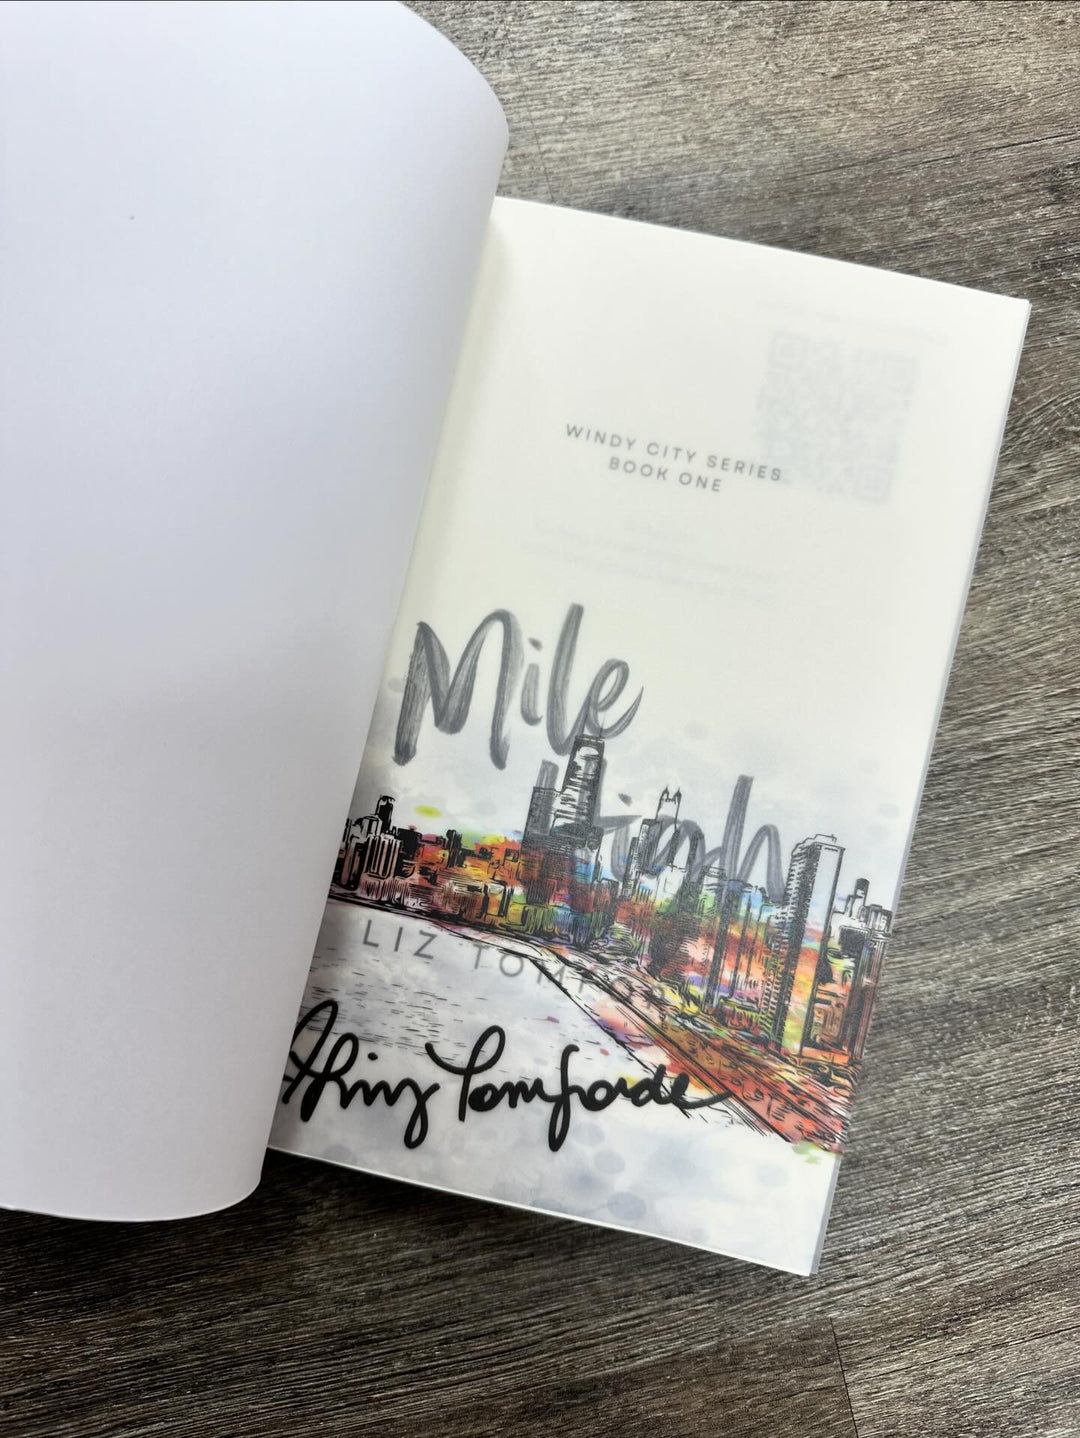 Liz Tomforde - City View Novel Notes™ - Digitally Signed Overlay Print